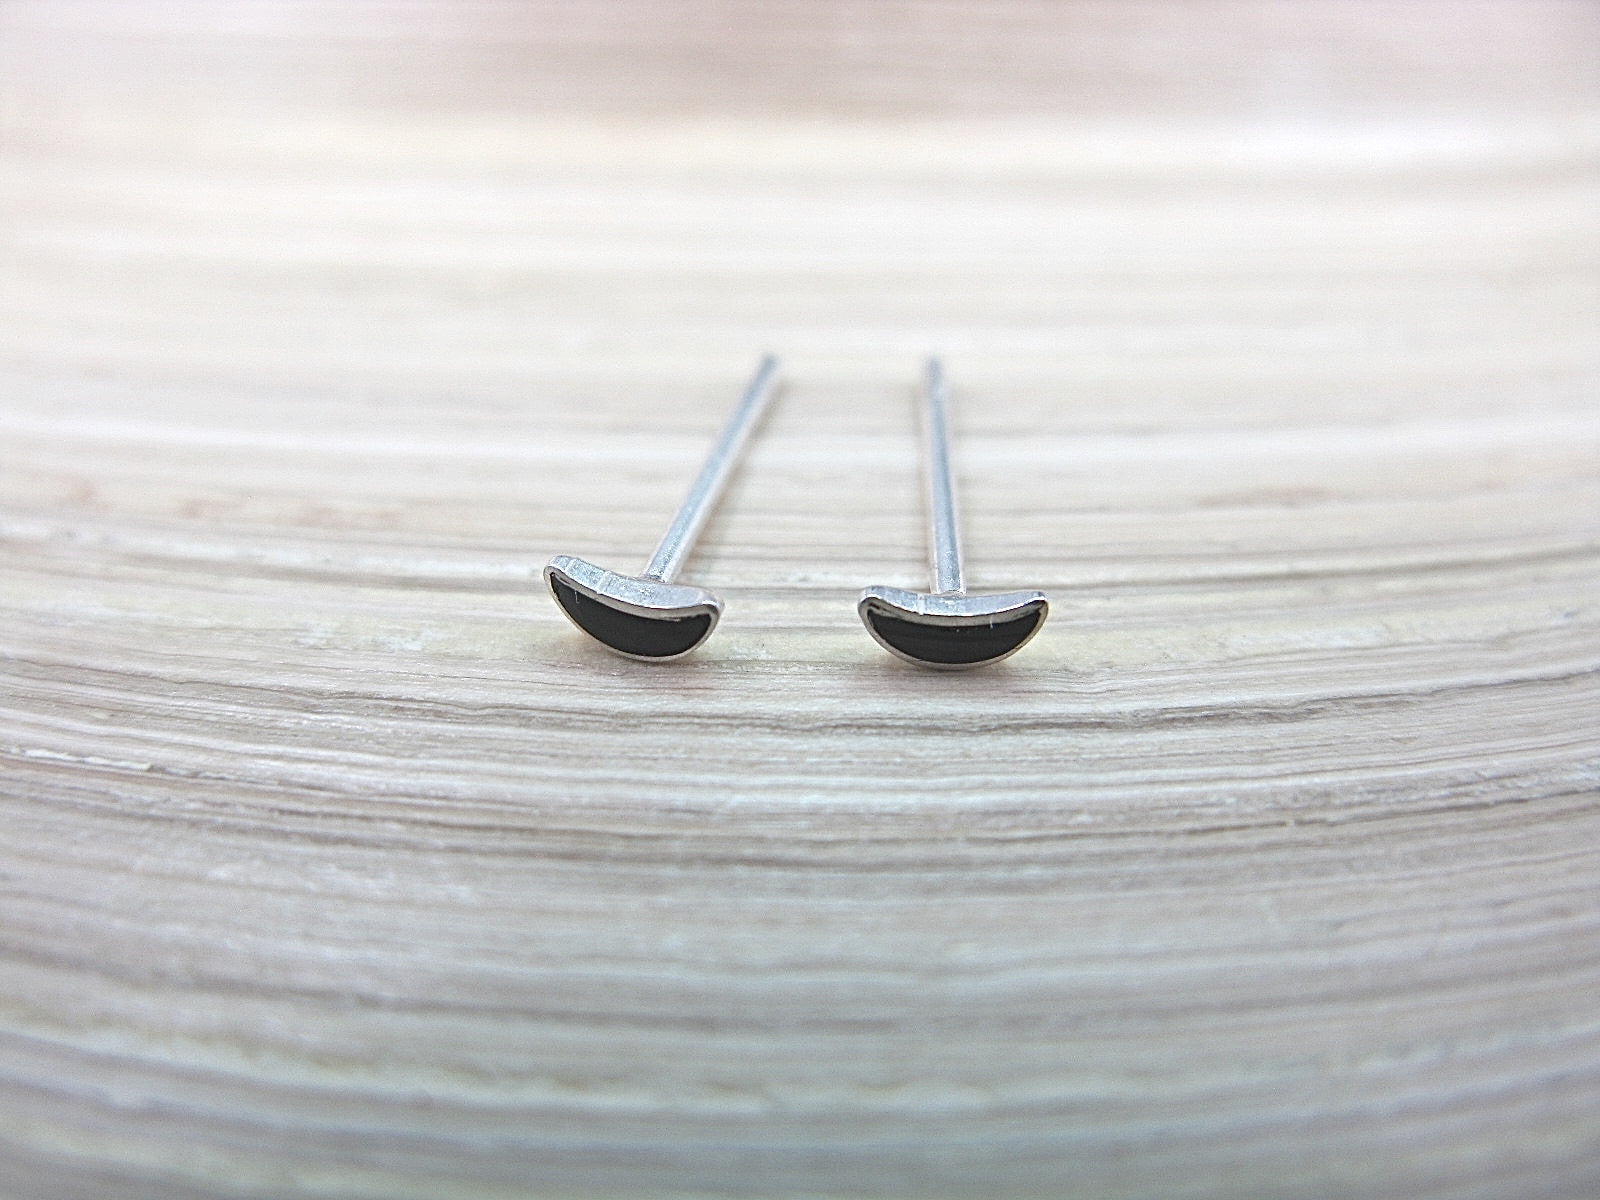 Onyx Crescent Moon Stud Earrings in 925 Sterling Silver